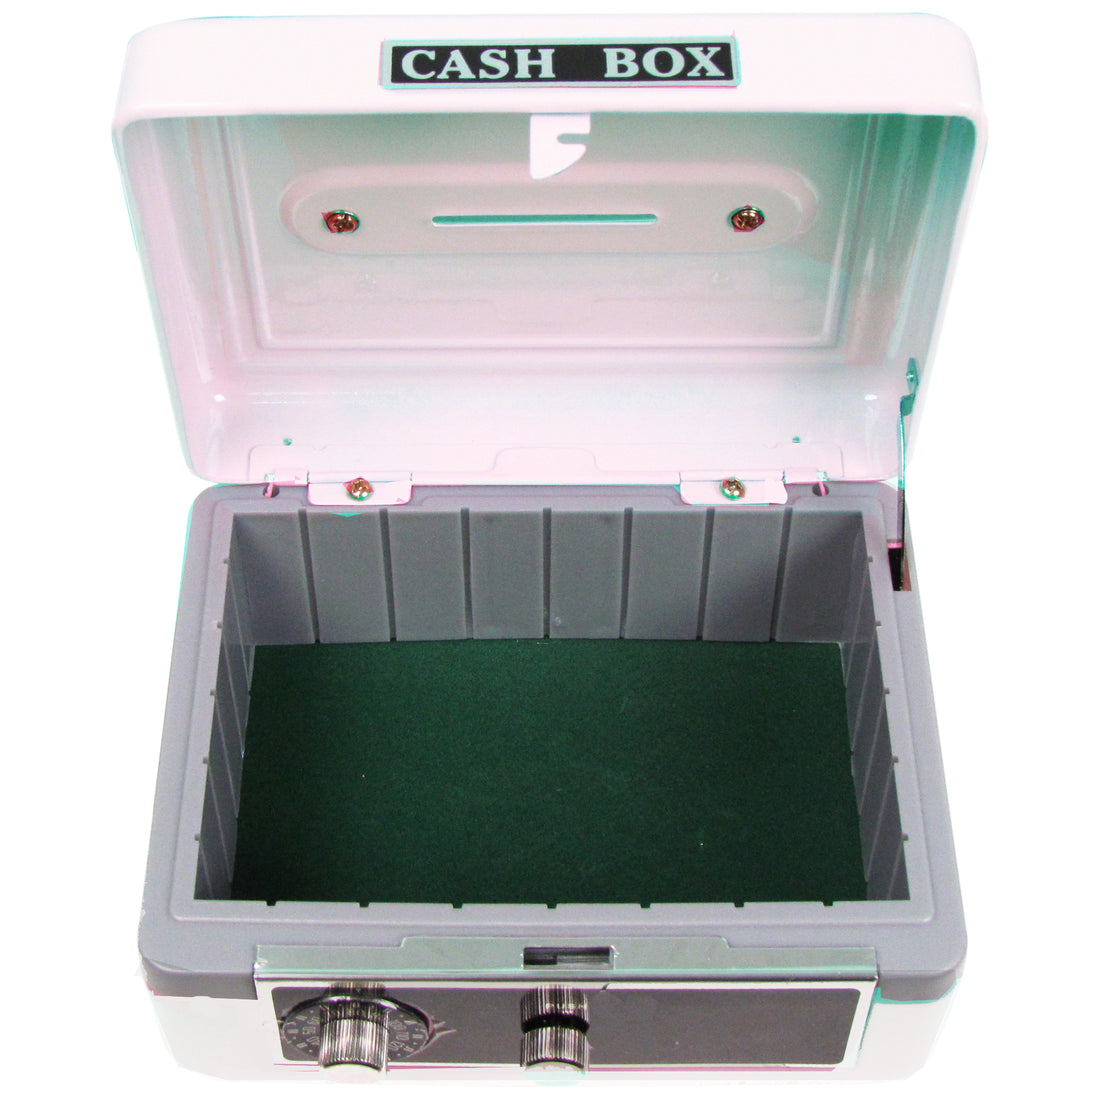 Personalized White Cash Box with Fire Truck design